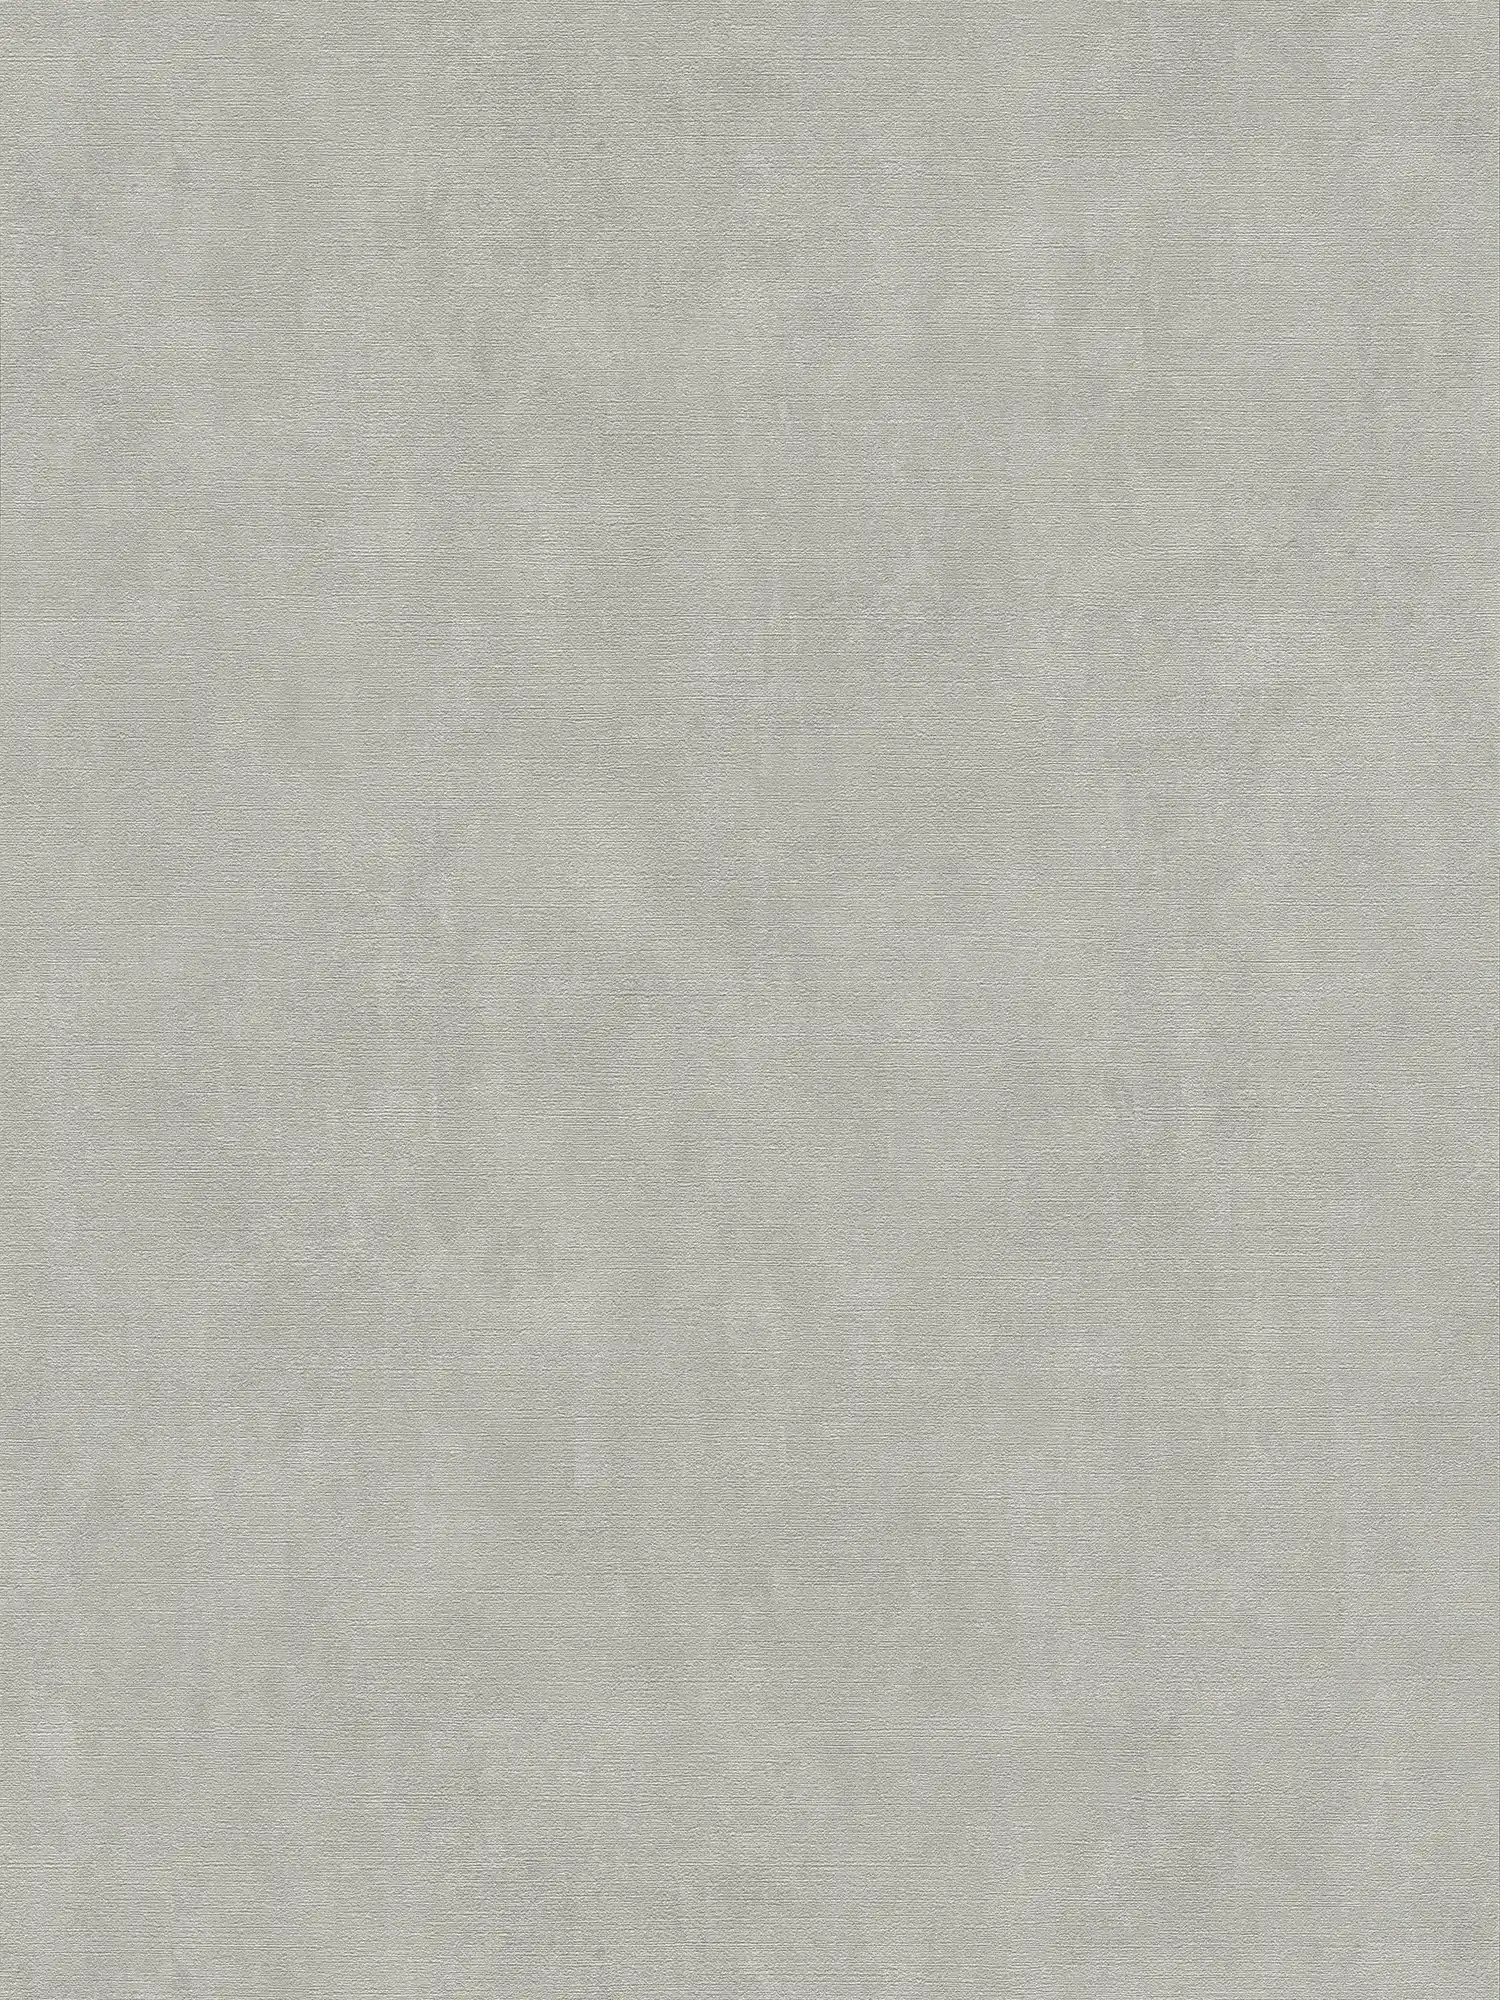 Wallpaper grey beige with plaster look in vintage style
